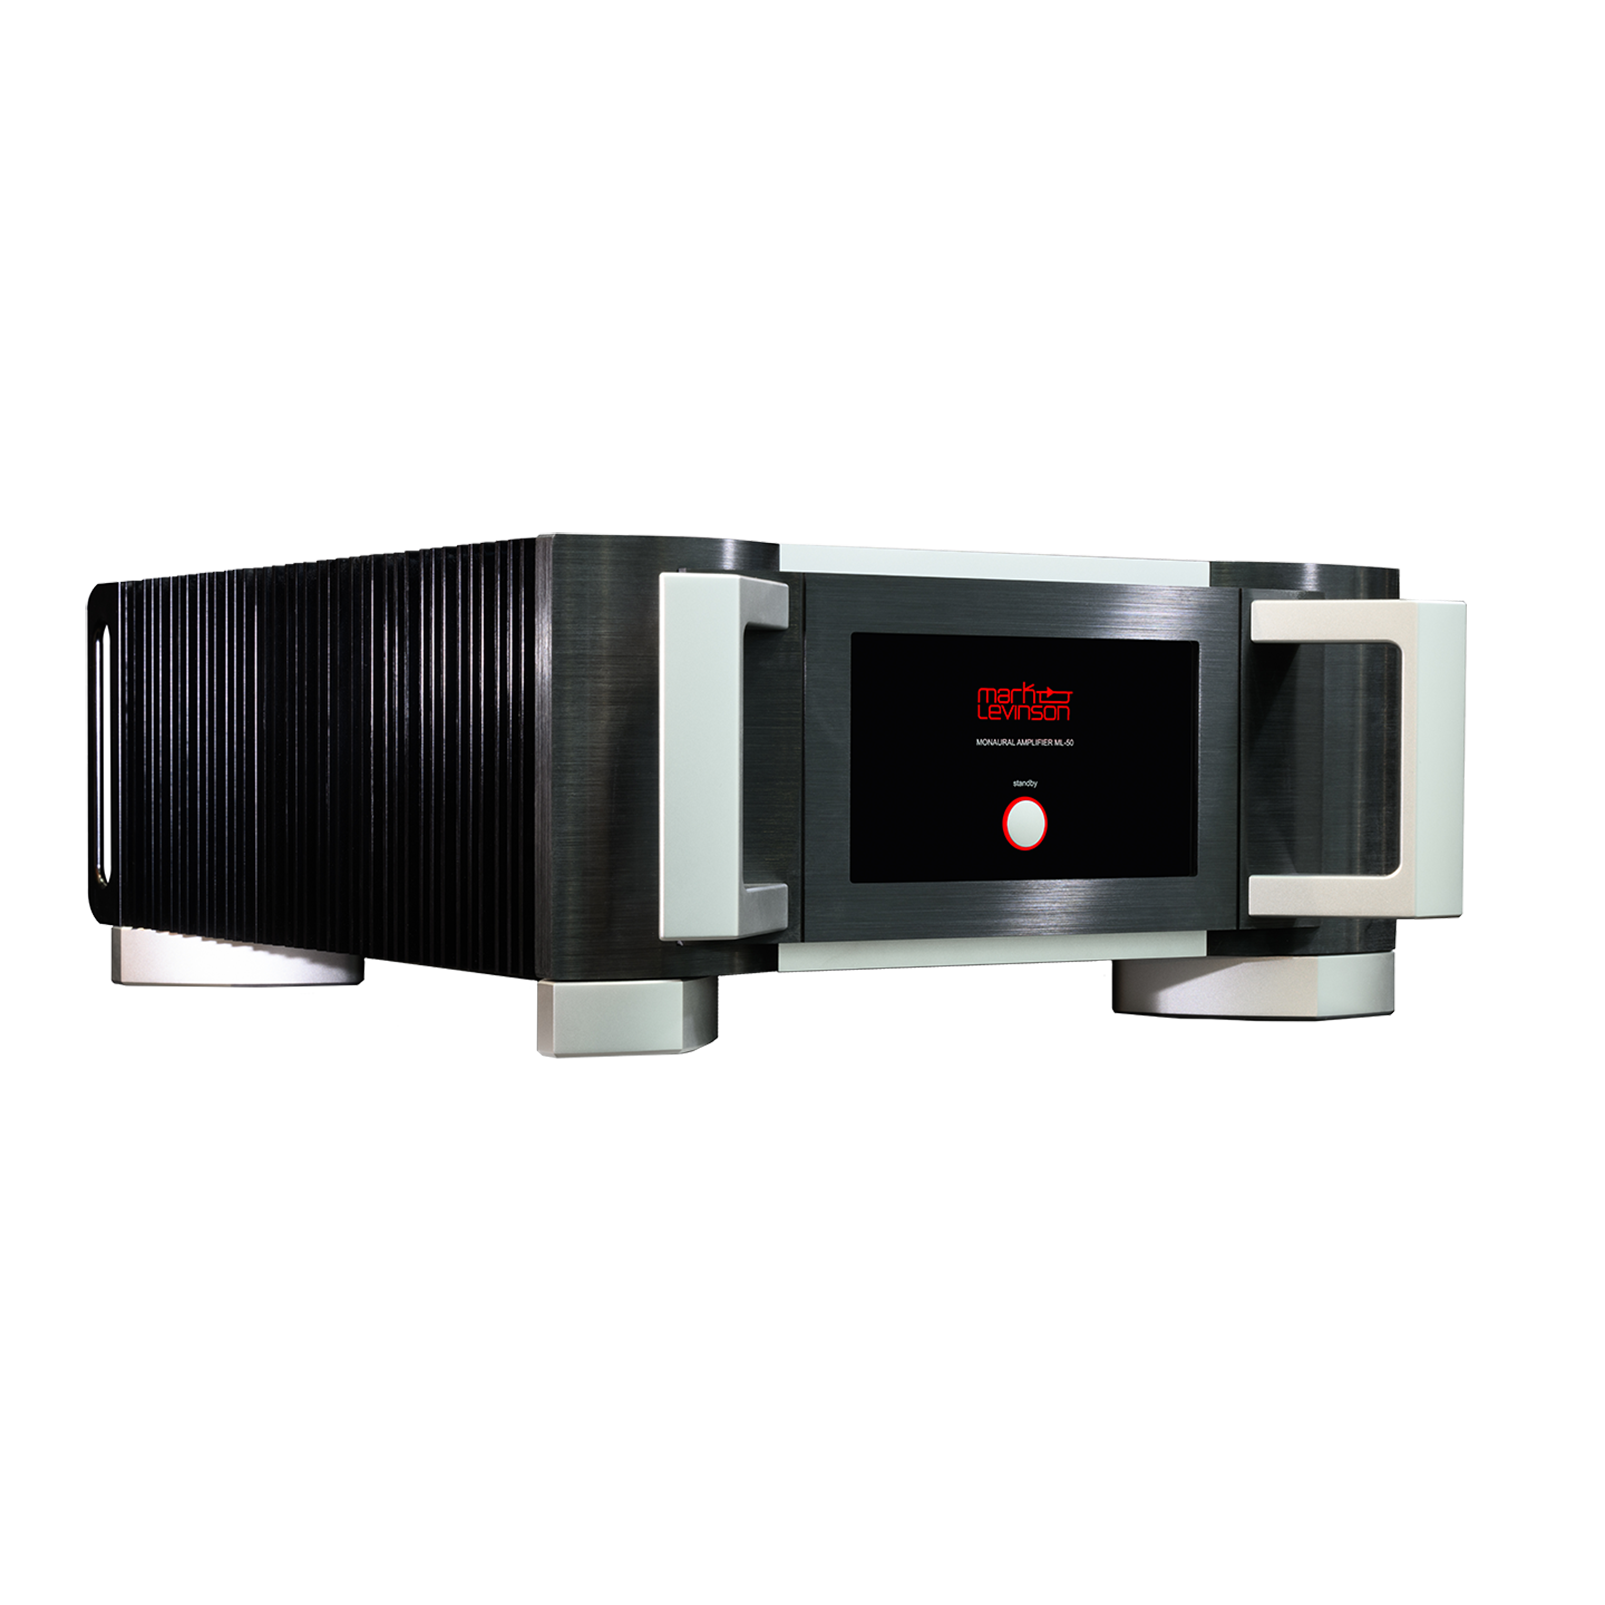 ML-50 - Black - Limited-edition Monaural Amplifier - Hero